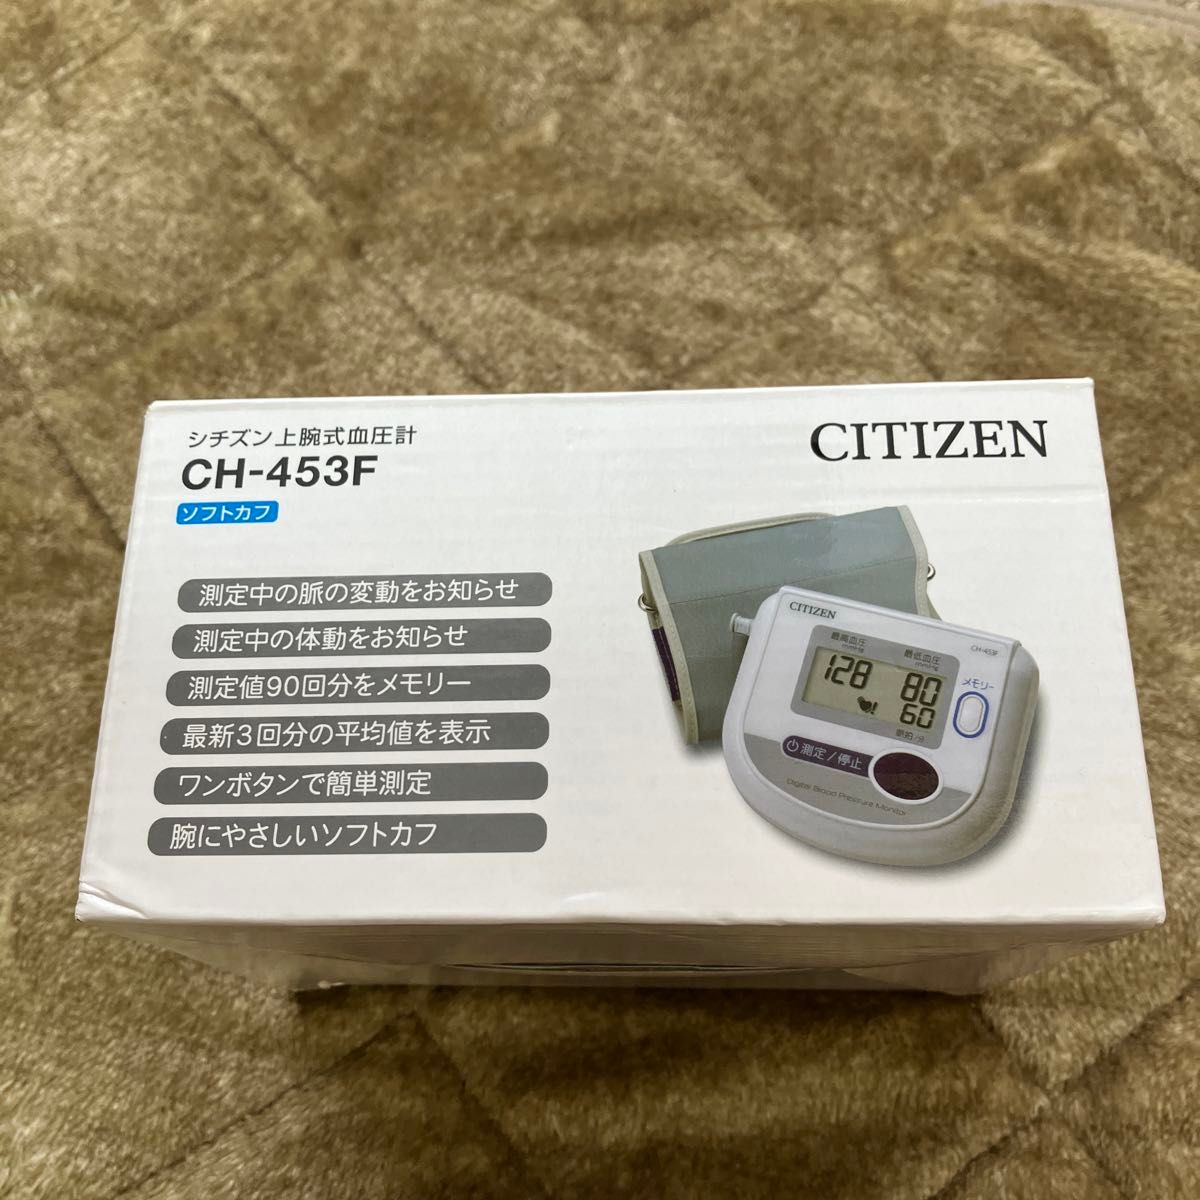 CH-453F CITIZEN シチズン 上腕式血圧計